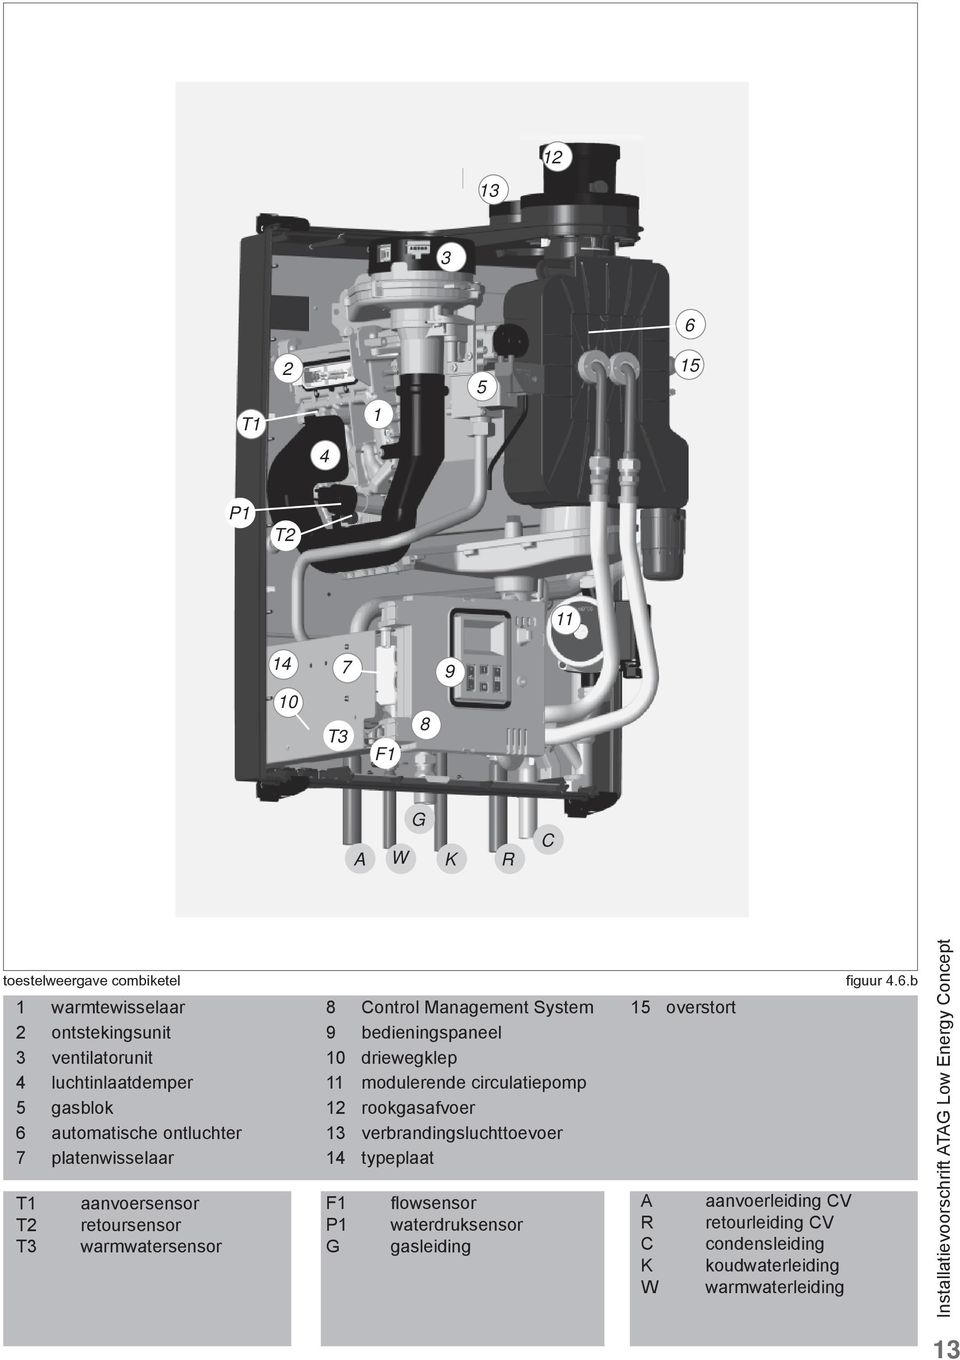 System 9 bedieningspaneel 10 driewegklep 11 modulerende circulatiepomp 12 rookgasafvoer 13 verbrandingsluchttoevoer 14 typeplaat F1 P1 G fl